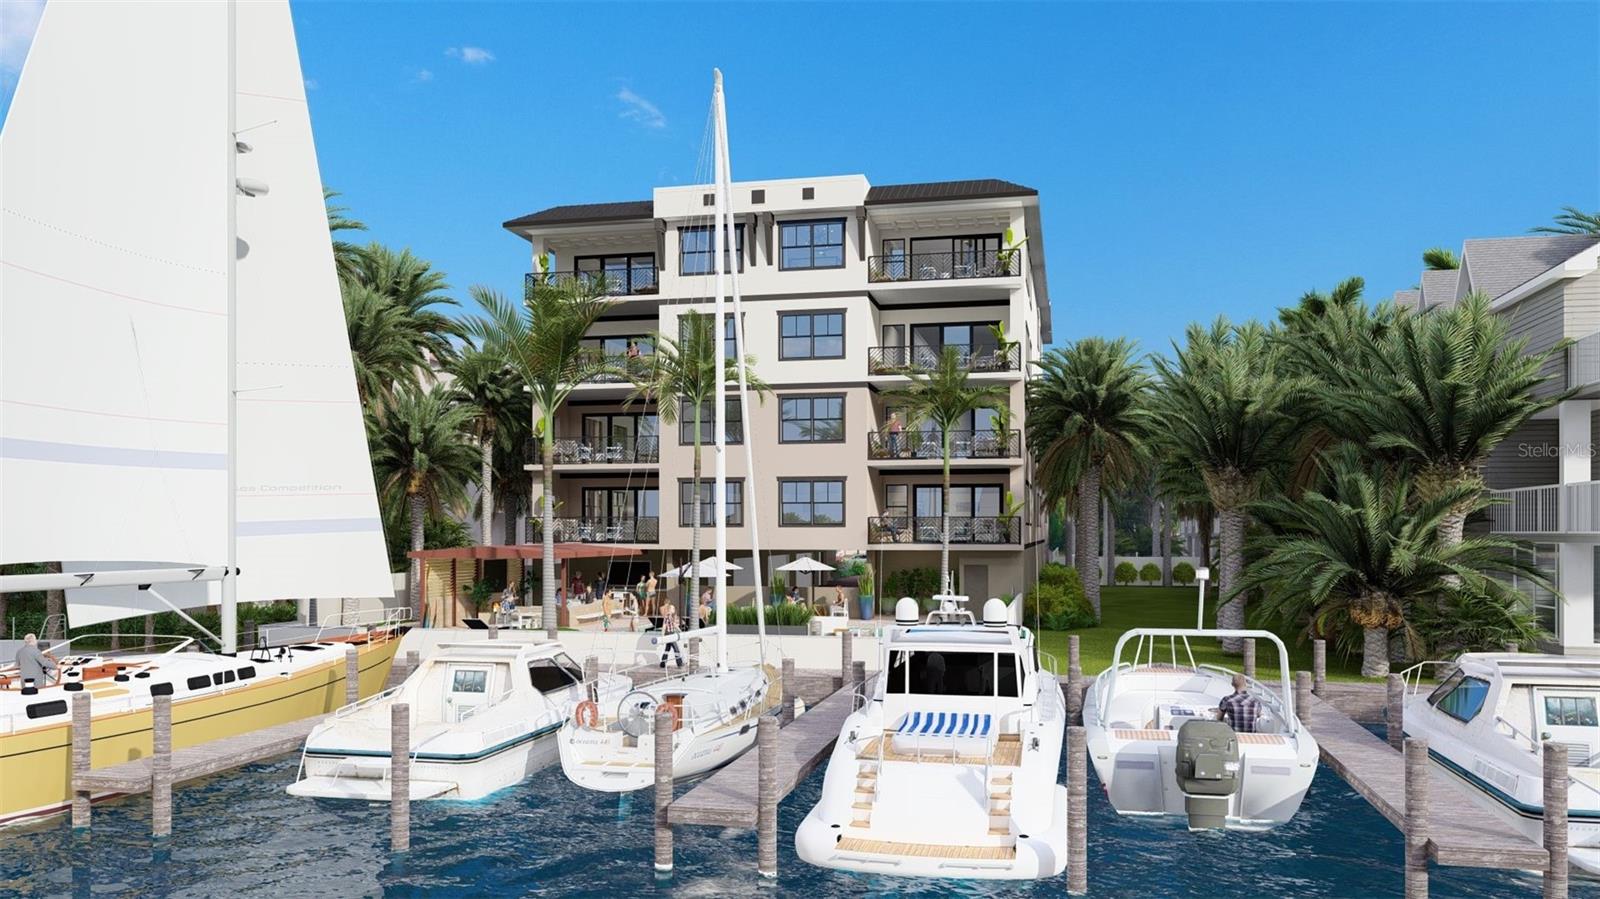 QUIET COVE! A Boaters Paradise! The beautiful NEW condominium development on Tierra Verde. Digital Rendering...